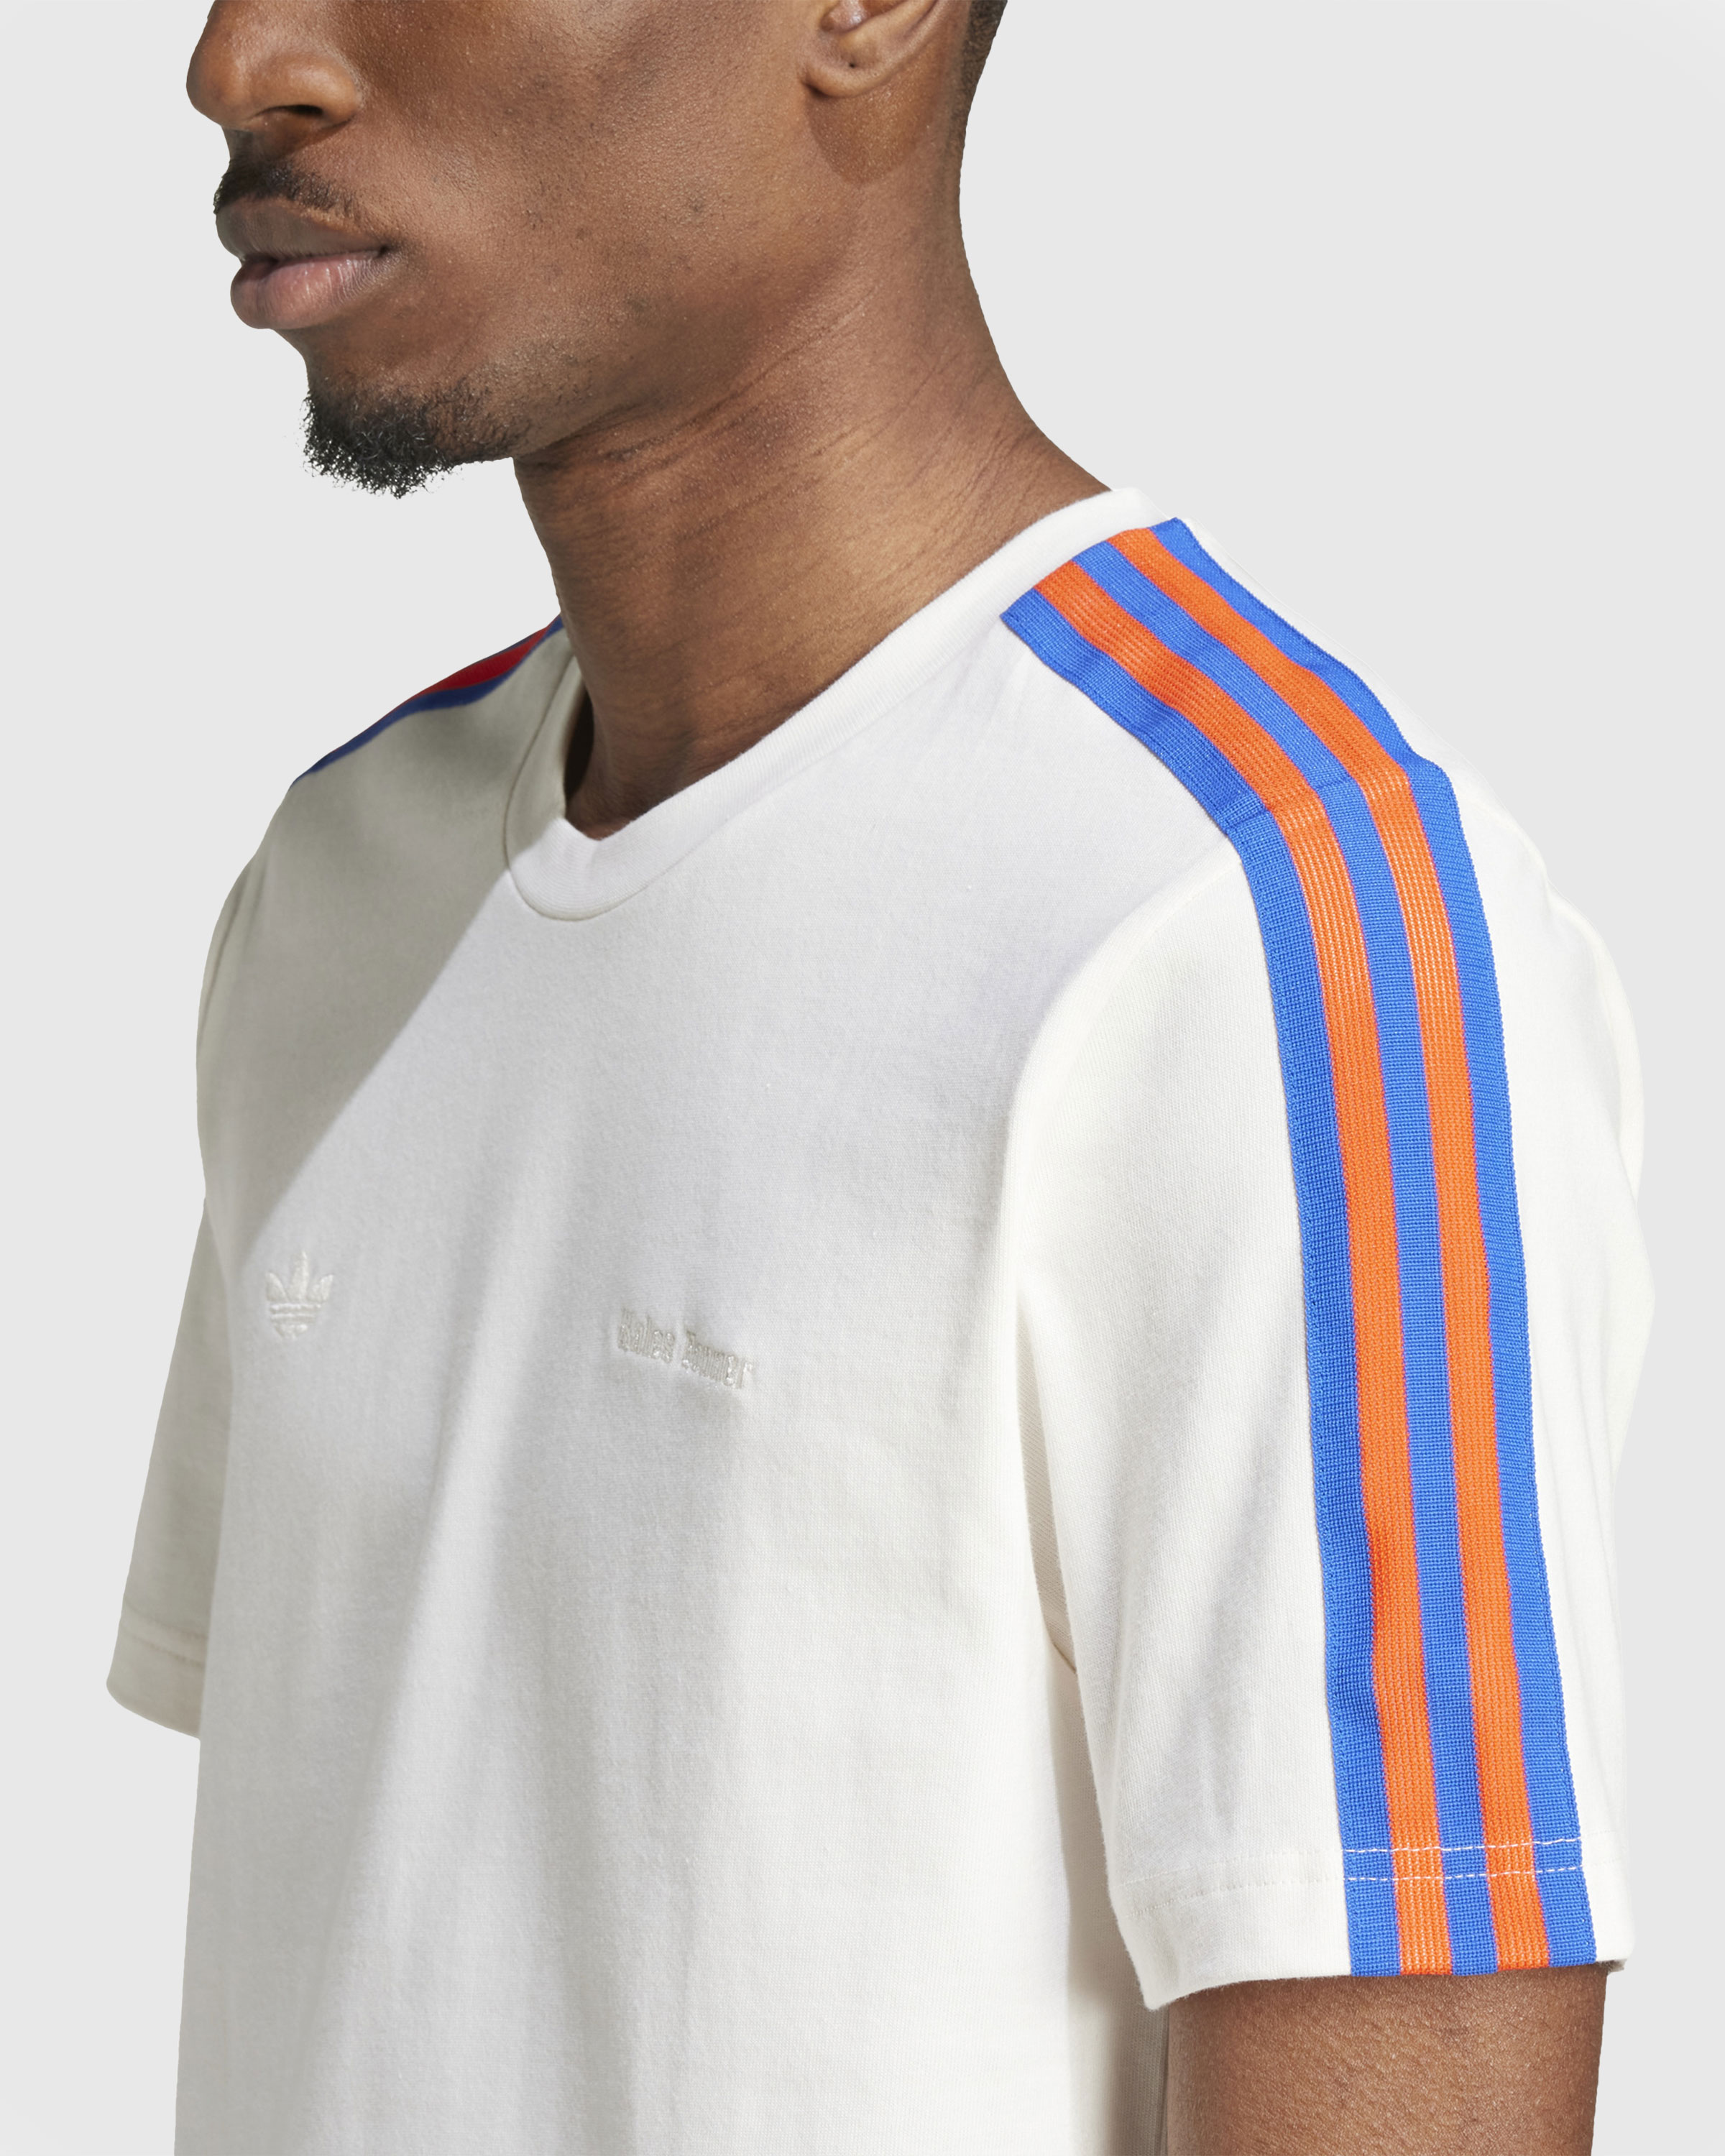 Adidas x Wales Bonner – Short-Sleeve Tee Chalk White - T-Shirts - White - Image 5